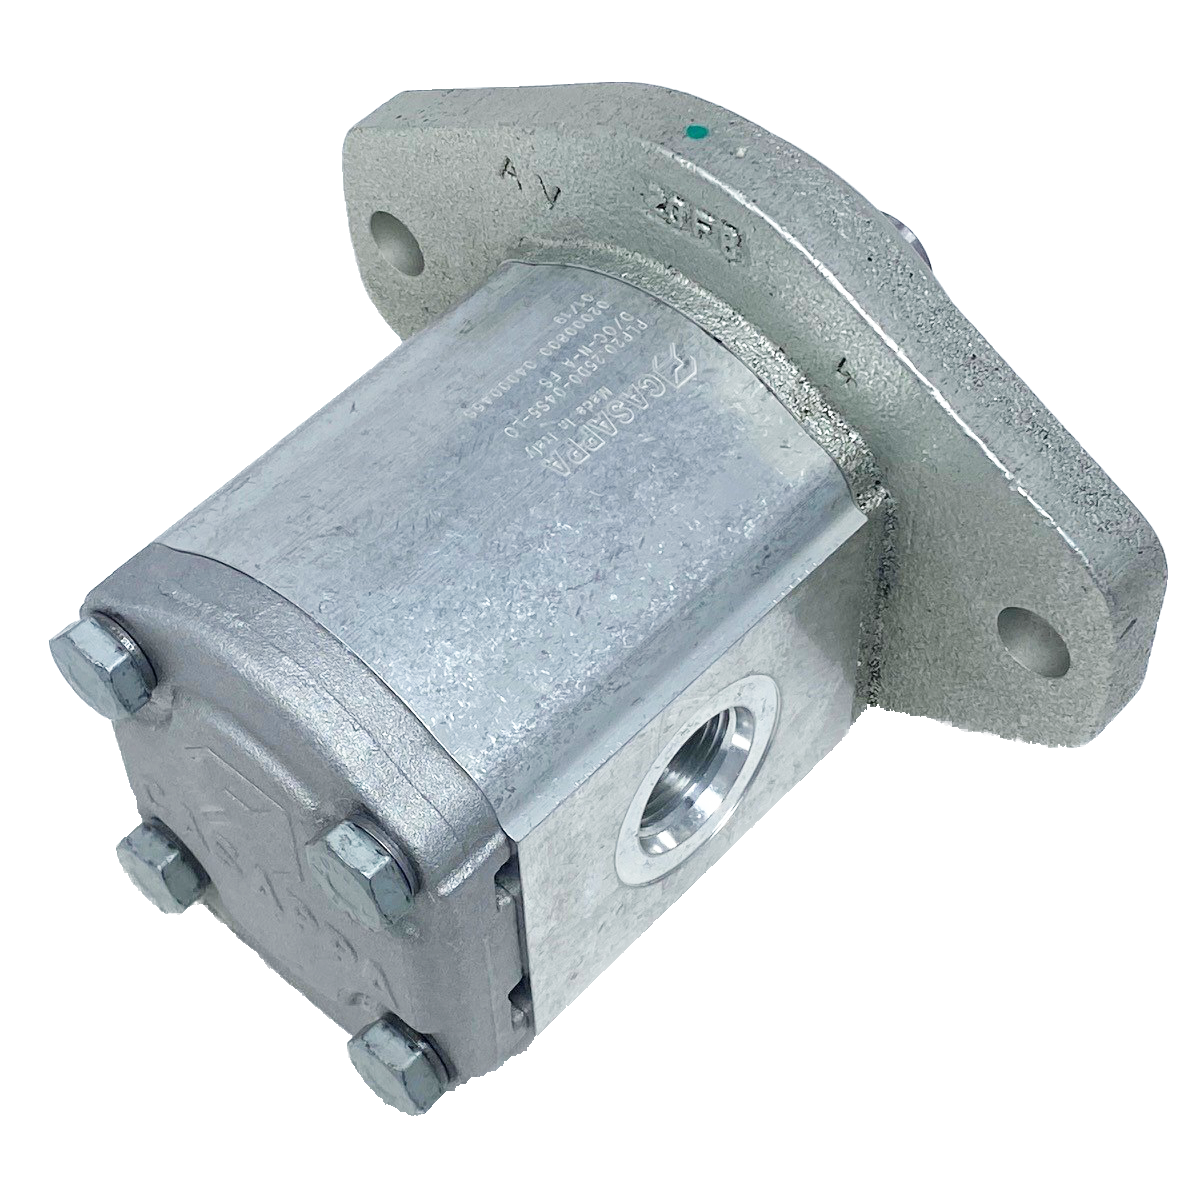 PLM20.16R0-32S5-LOC/OD-N-L : Casappa Polaris Gear Motor, 16.85cc, 3625psi, 3000RPM, Reversible, External Drain, 3/4" Bore x 1/4" Key Shaft, SAE B 2-Bolt Flange, 0.625 (5/8") #10 SAE In, 0.75 (3/4") #12 SAE Out, Aluminum Body, Cast Iron Flange